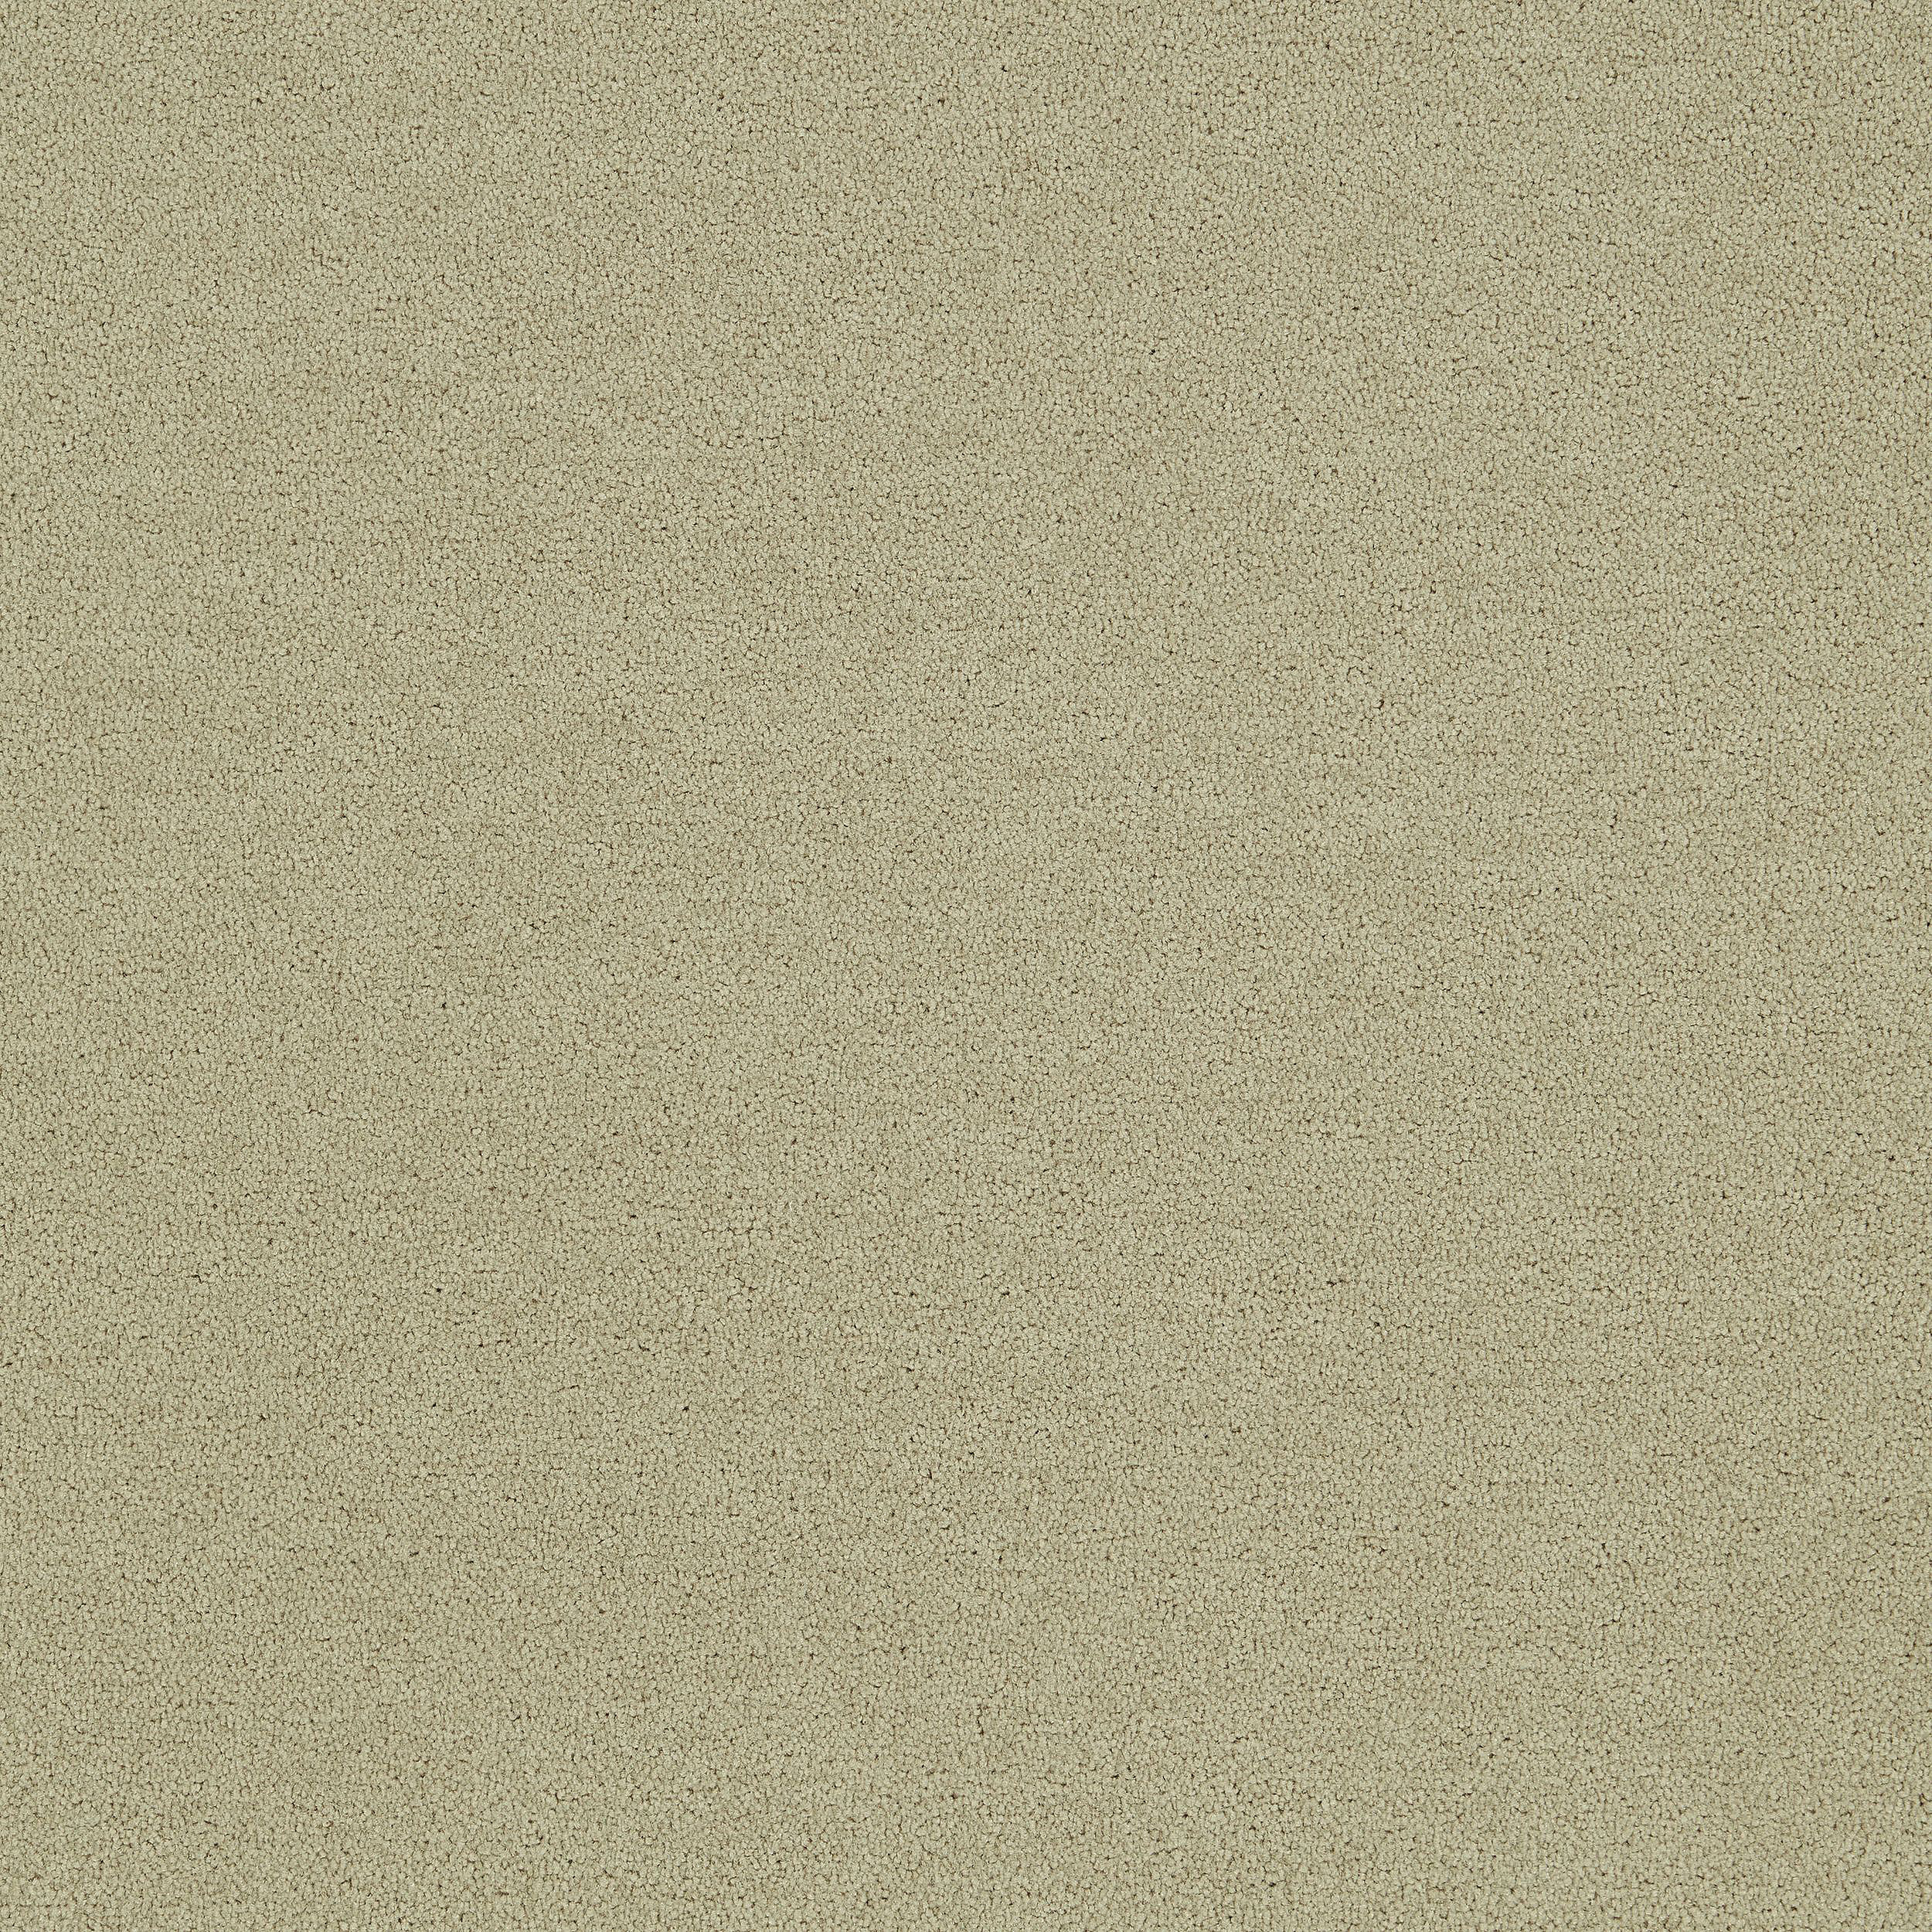 Polichrome Solid Carpet Tile In Turtledove Bildnummer 6